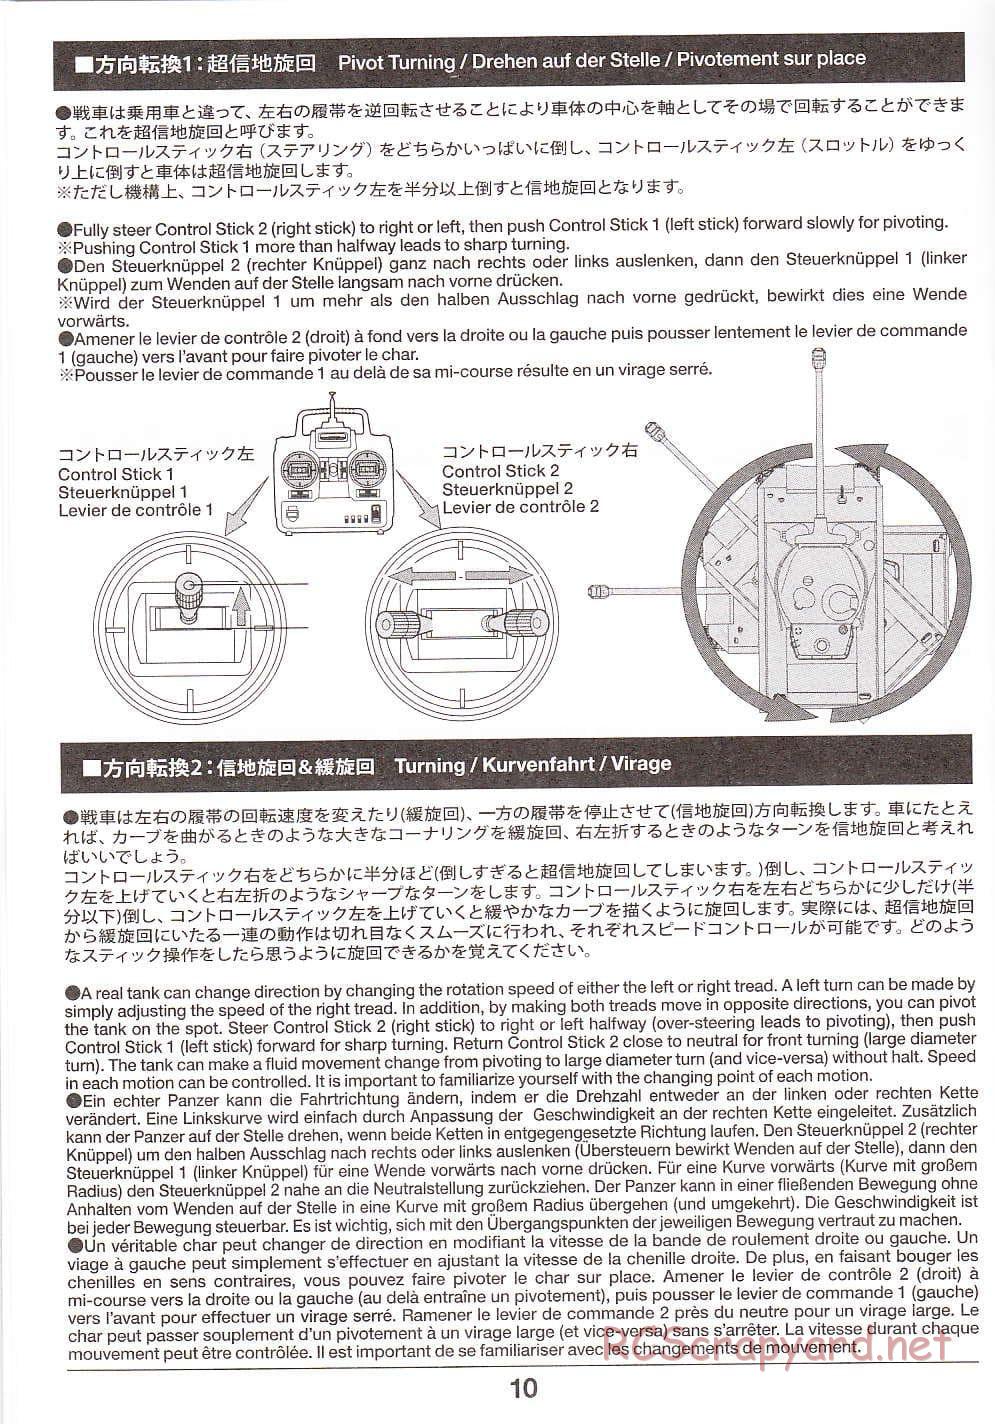 Tamiya - Super Sherman M-51 - 1/16 Scale Chassis - Operation Manual - Page 10